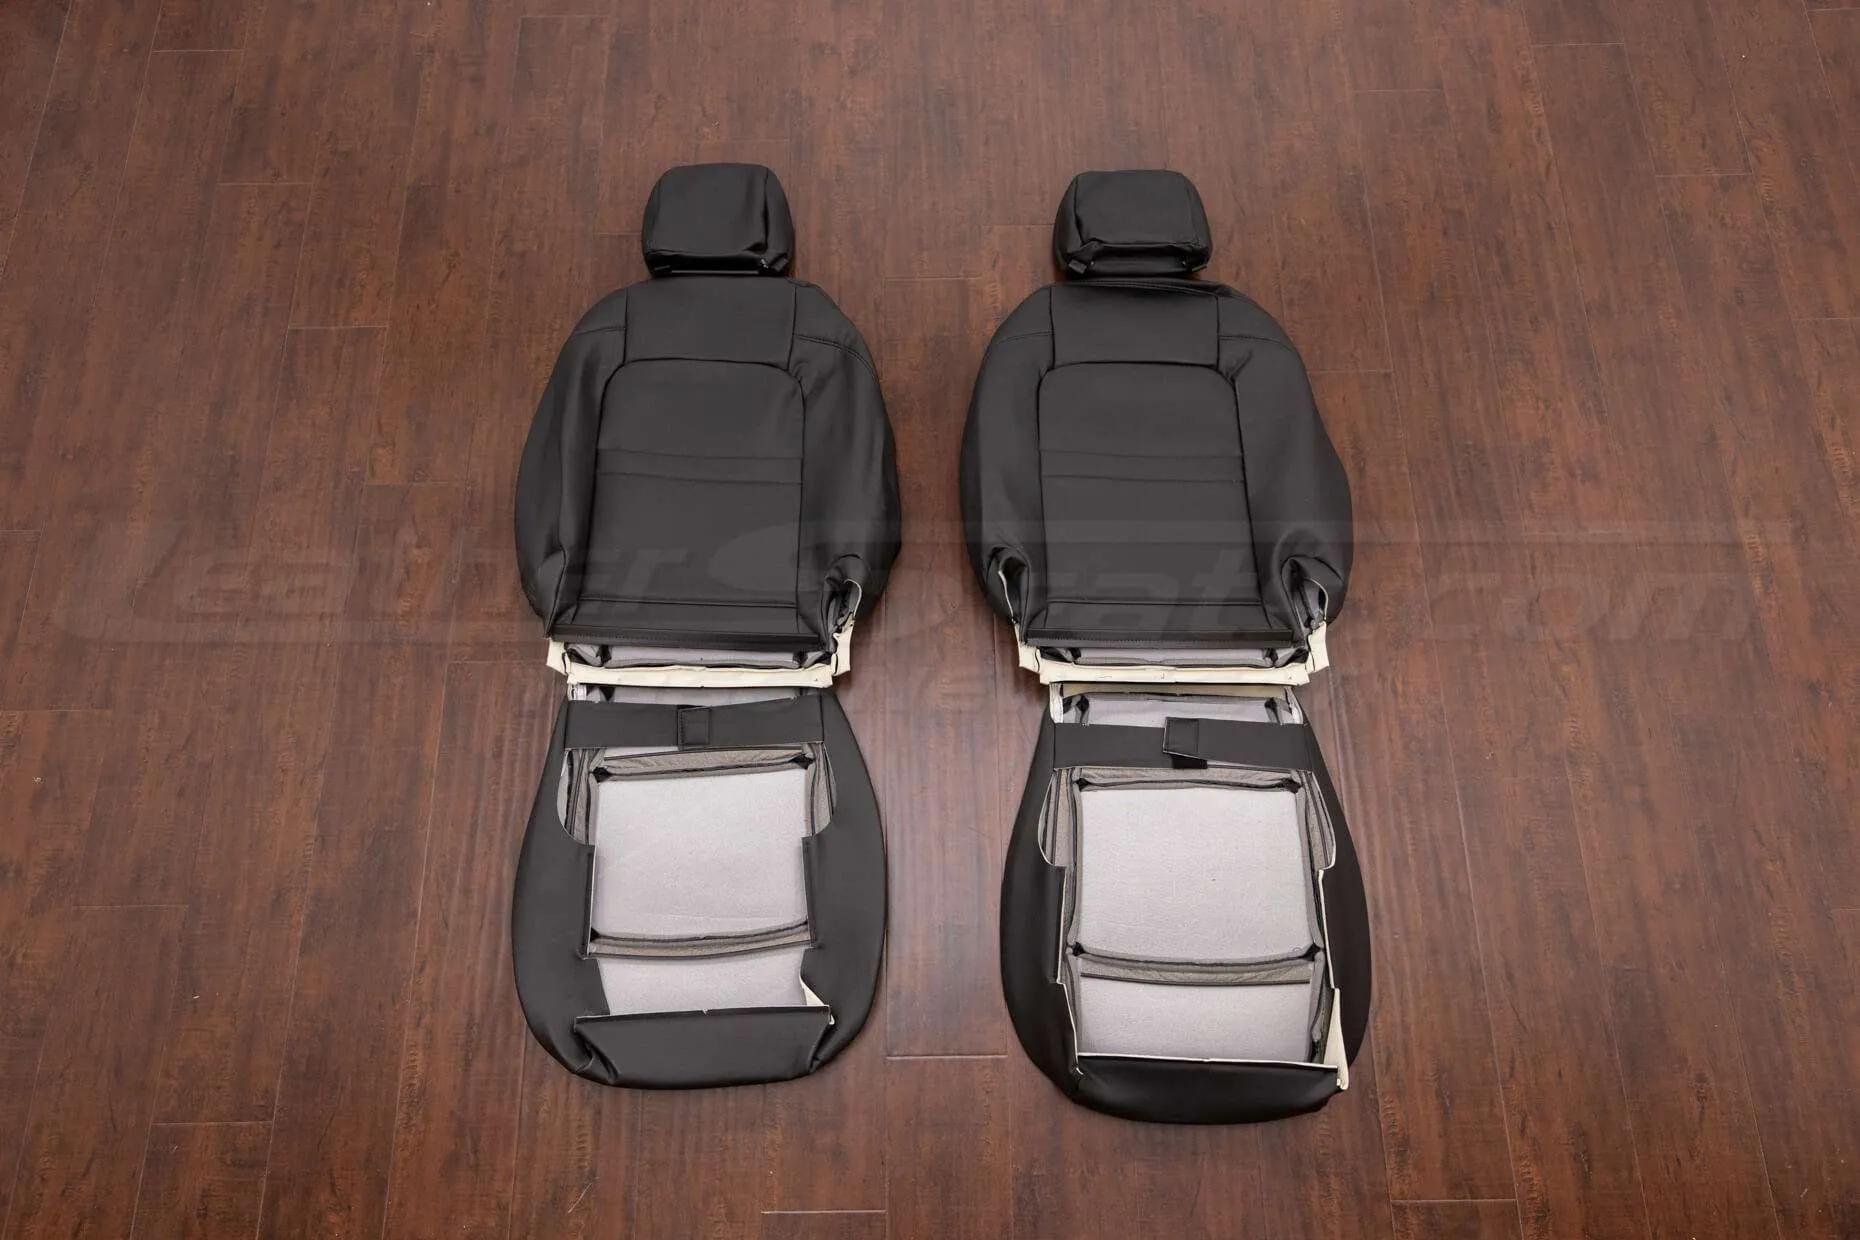 16-20 Chevrolet Malibu Upholstery Kit - Black - Back view of front seats